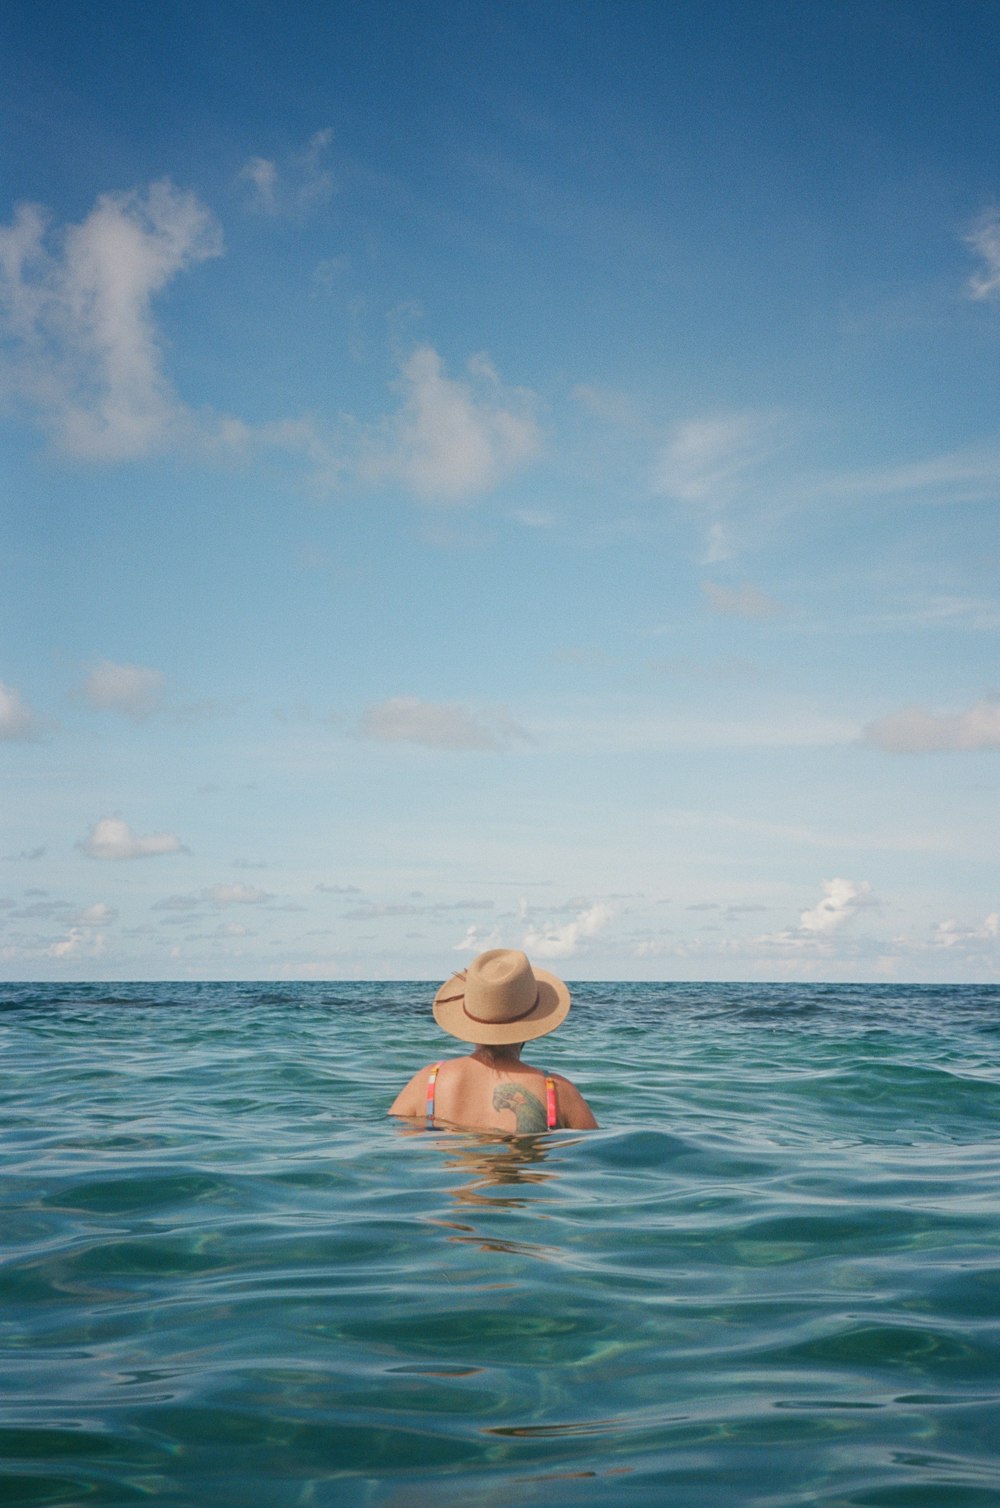 a woman in a bikini and hat in the ocean